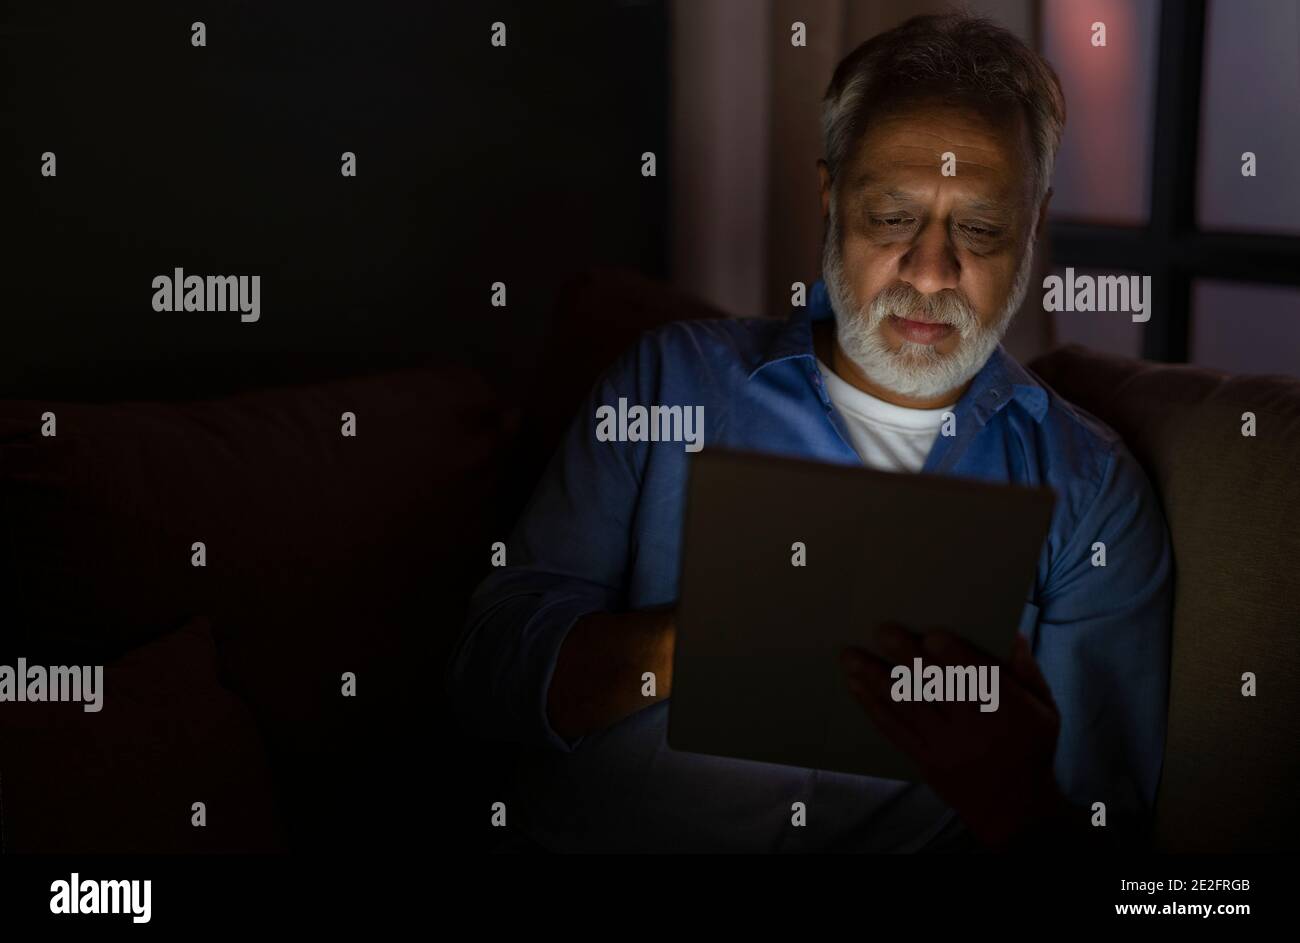 A SENIOR ADULT MAN USING DIGITAL TABLET AT NIGHT Stock Photo